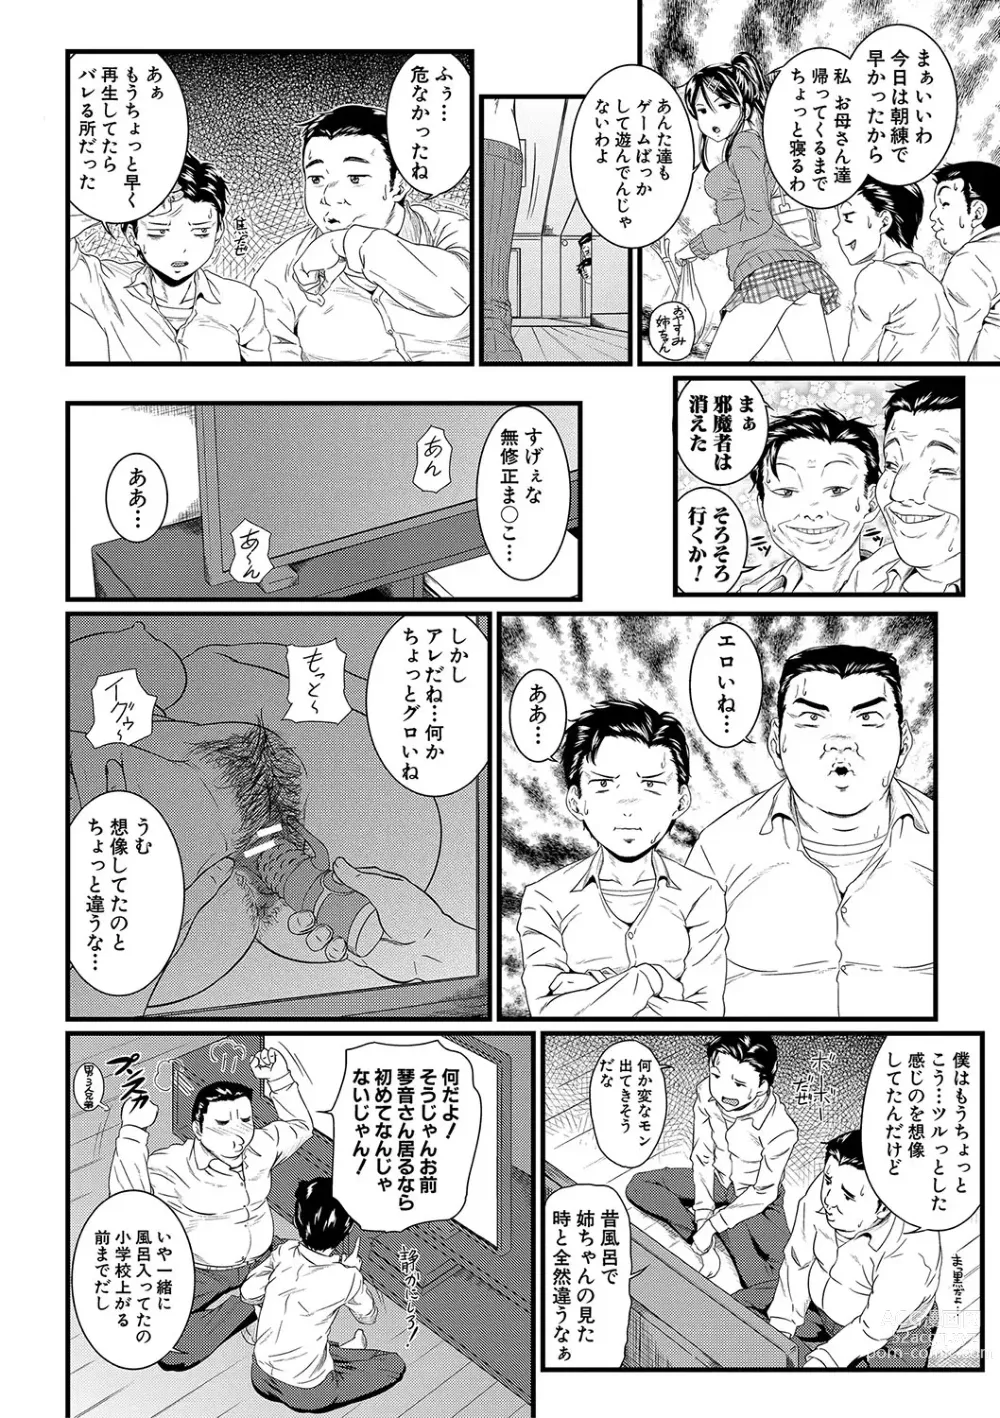 Page 7 of manga 睡眠姦淫